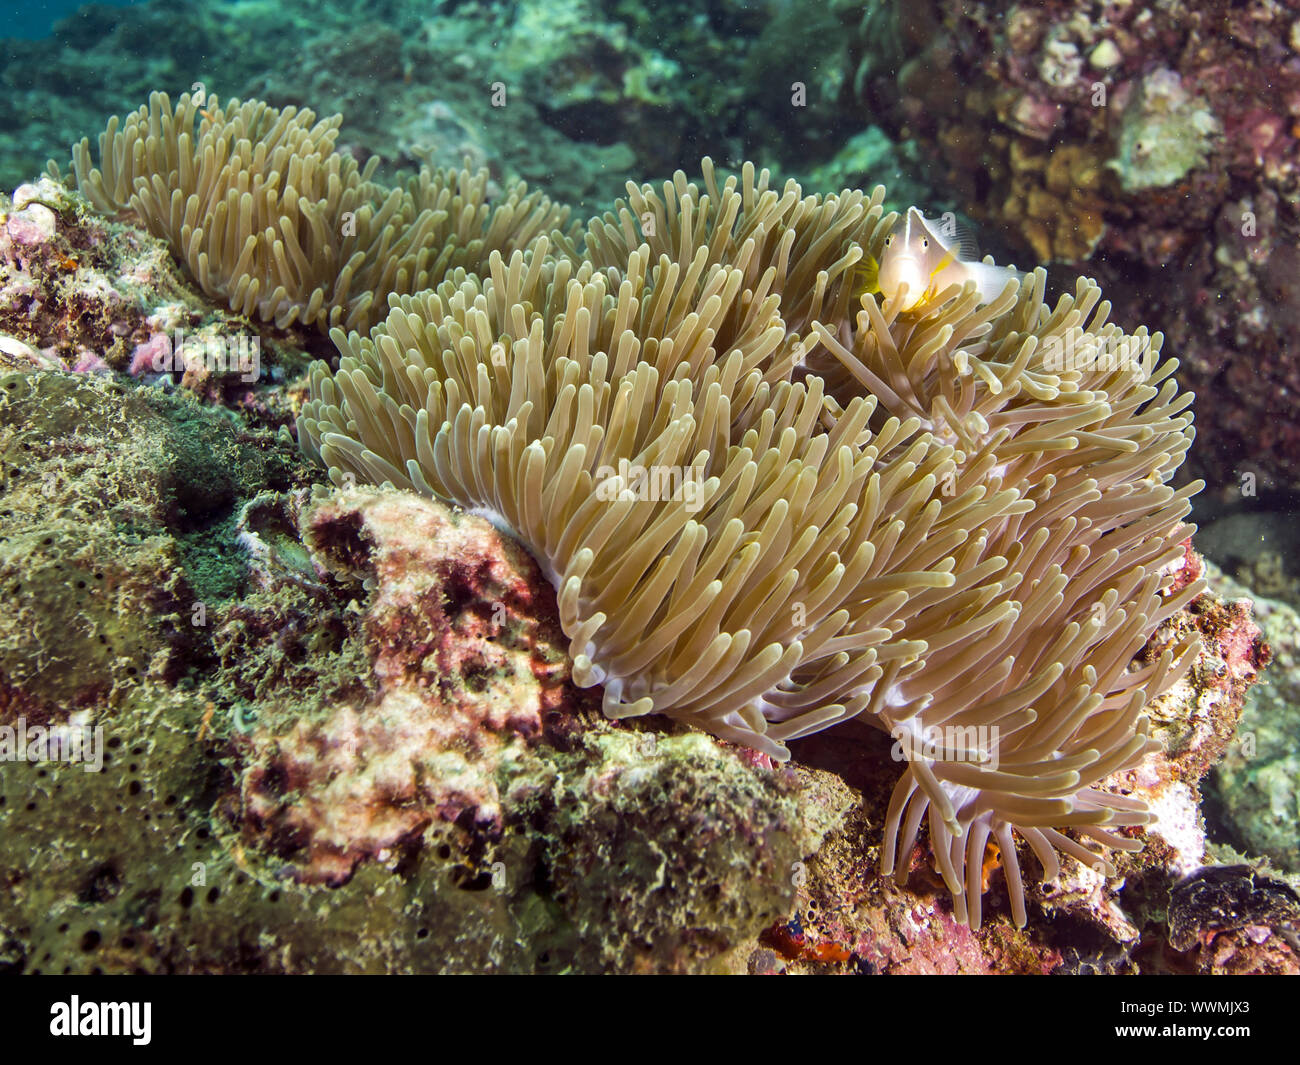 Anemonefish nosestripe (Amphiprion akallopisos) Foto Stock